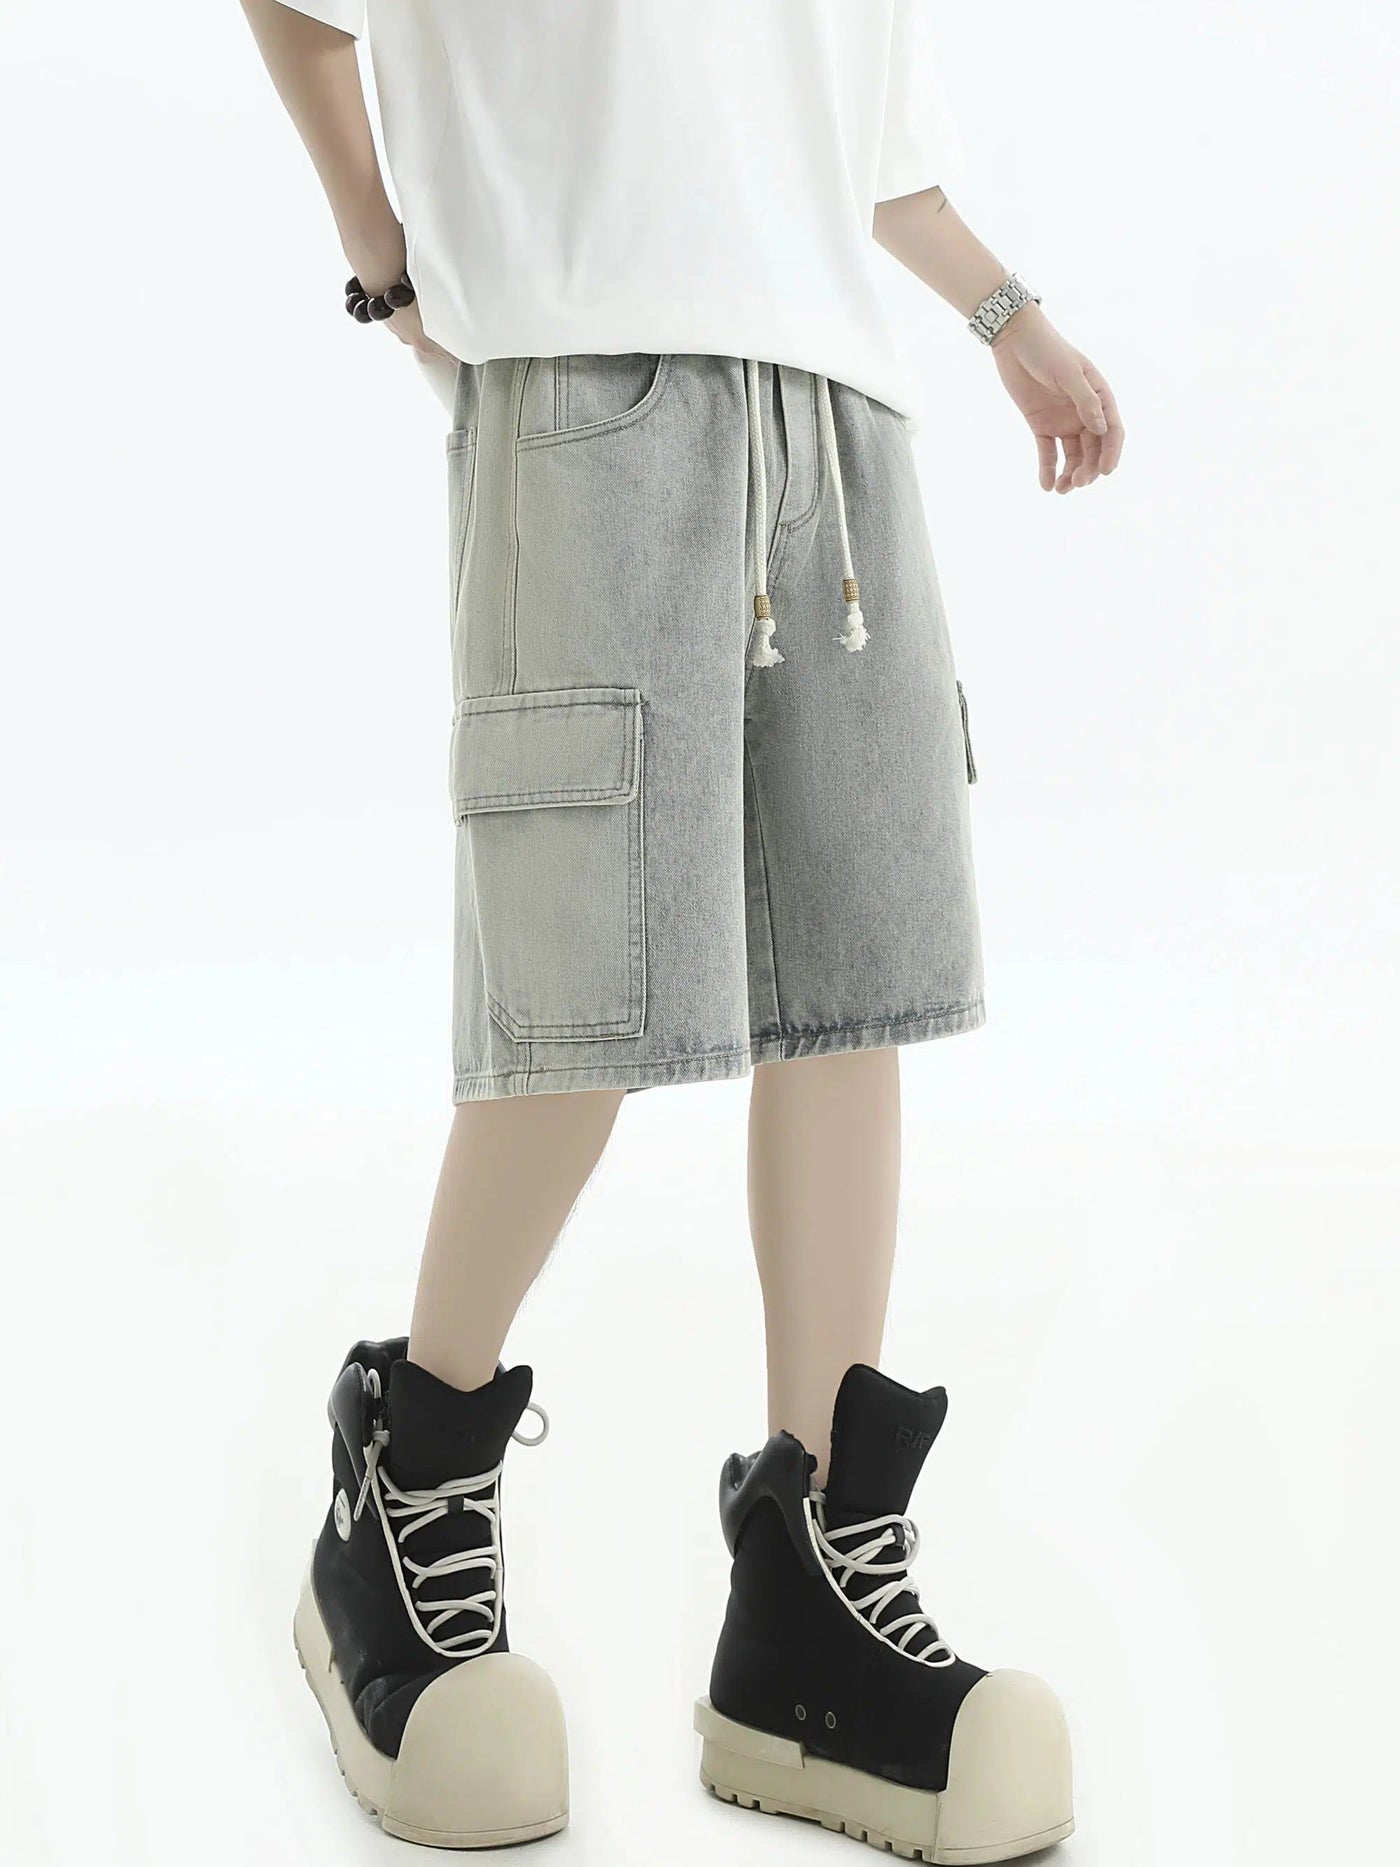 Highlight Side Denim Shorts Korean Street Fashion Shorts By INS Korea Shop Online at OH Vault